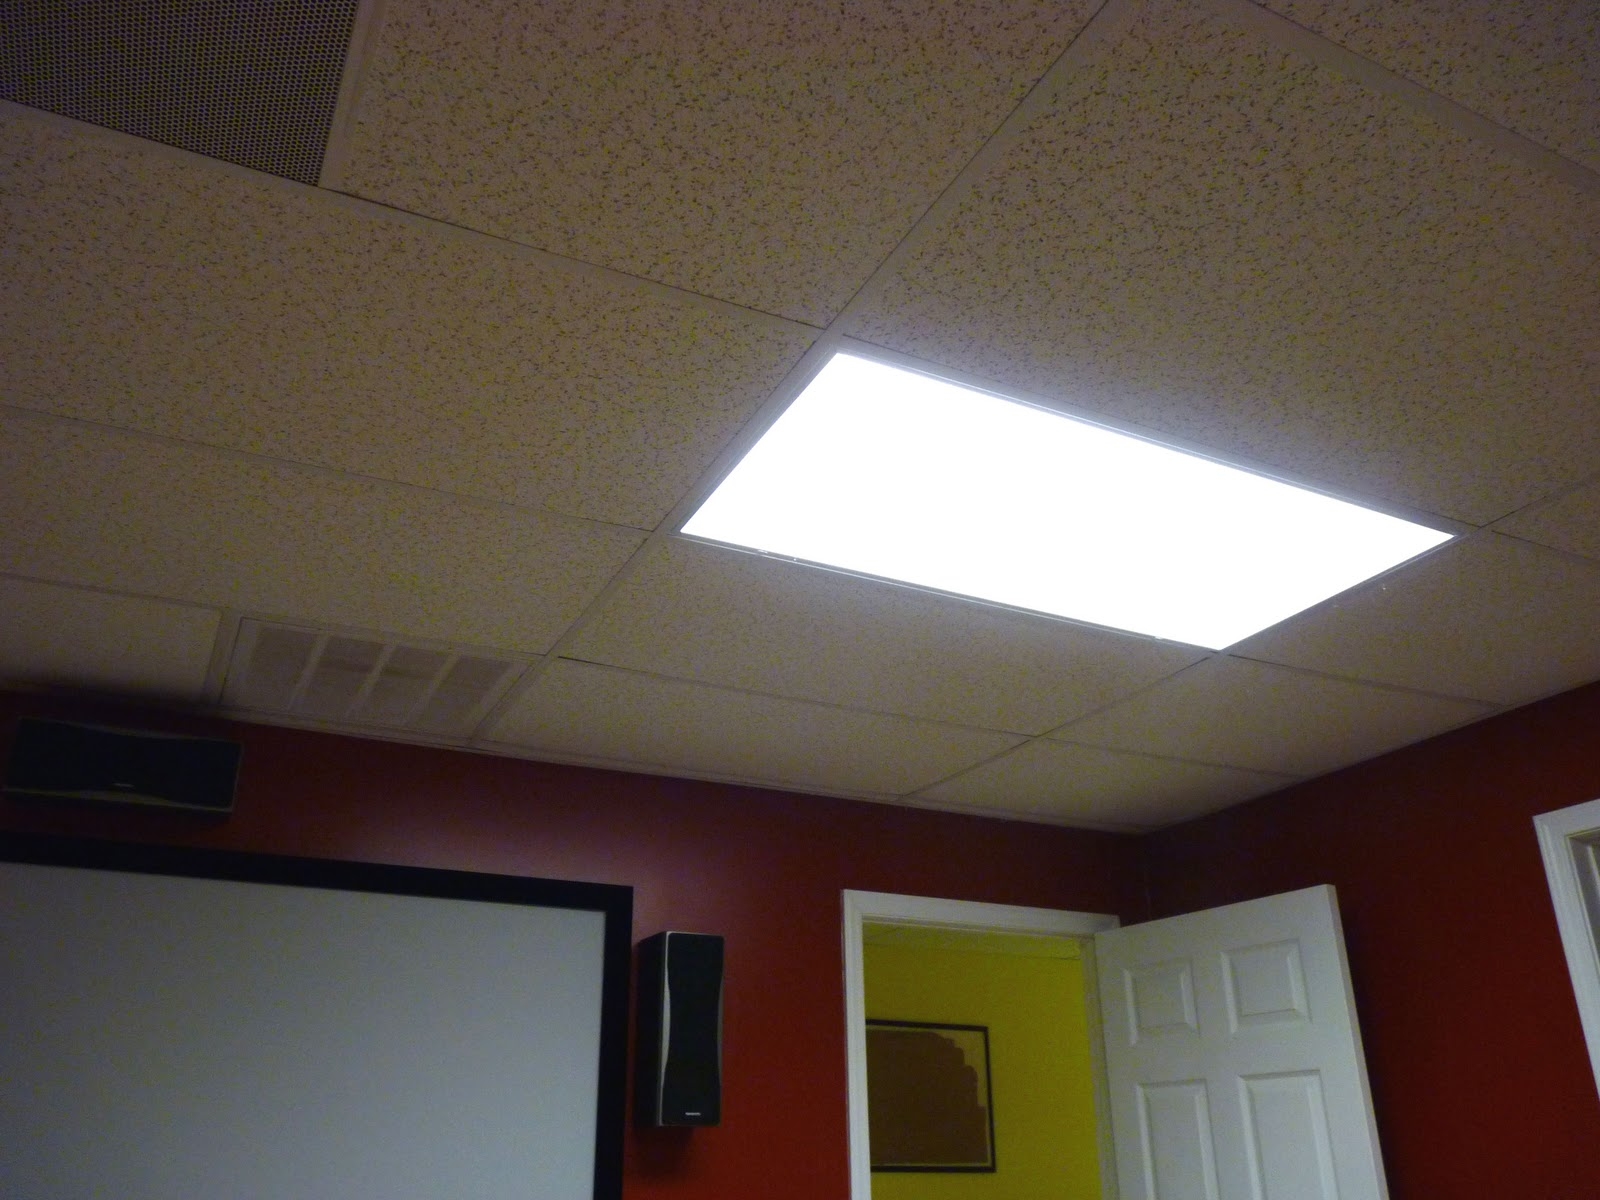 Suspended Ceiling Fluorescent Lightssuspended ceiling fluorescent lights 10 tips for installing